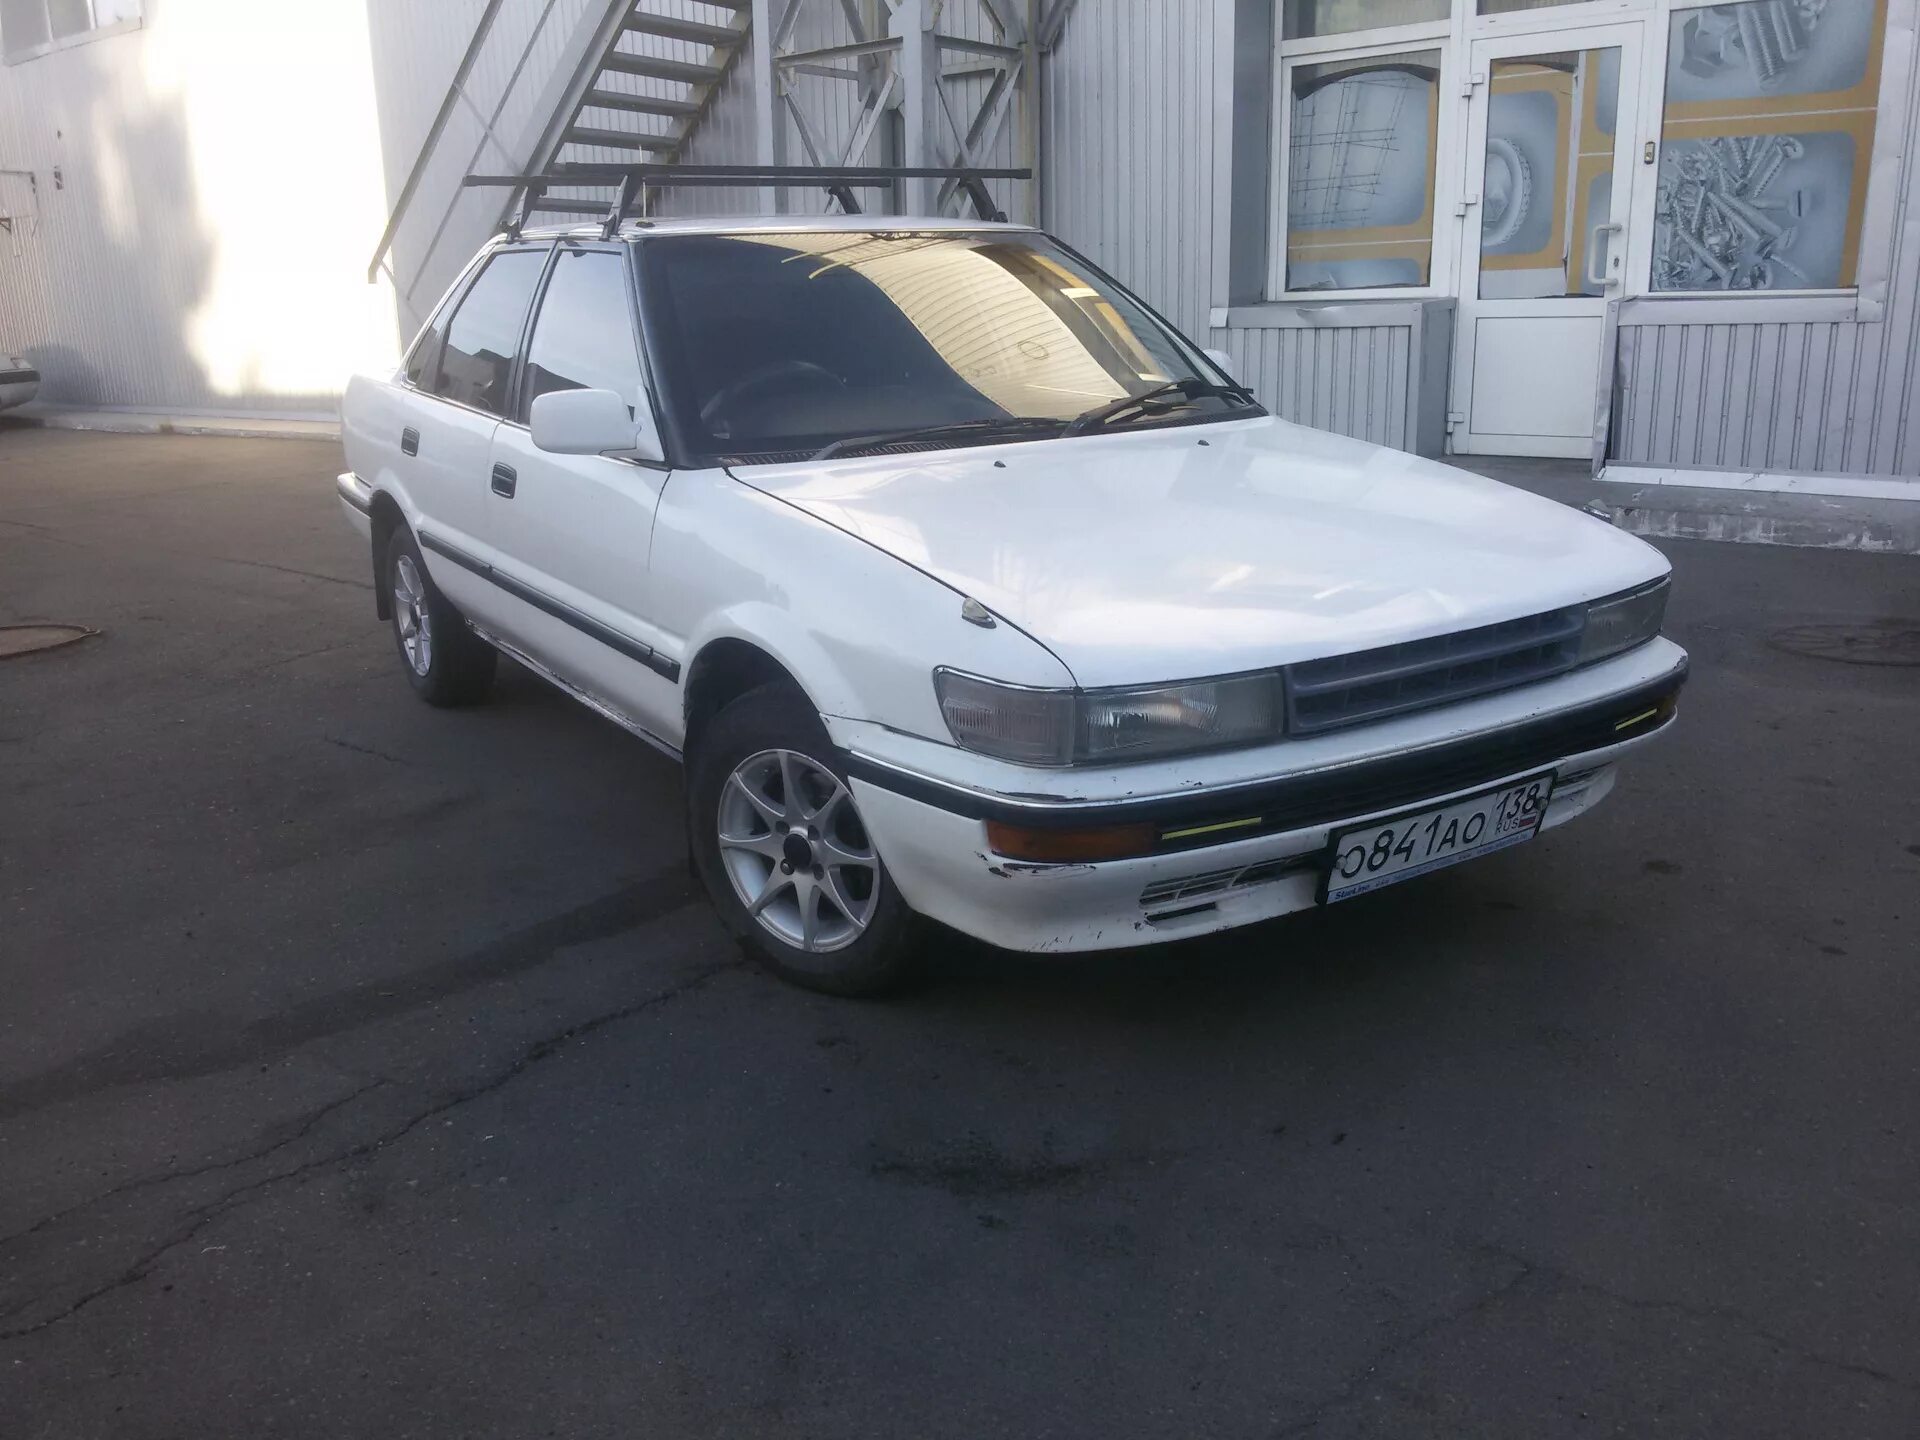 Toyota Sprinter 1988. Тойота Спринтер 1988. Тойота Спринтер 1988г. Toyota Toyota Sprinter, 1988 год. Спринтер 90